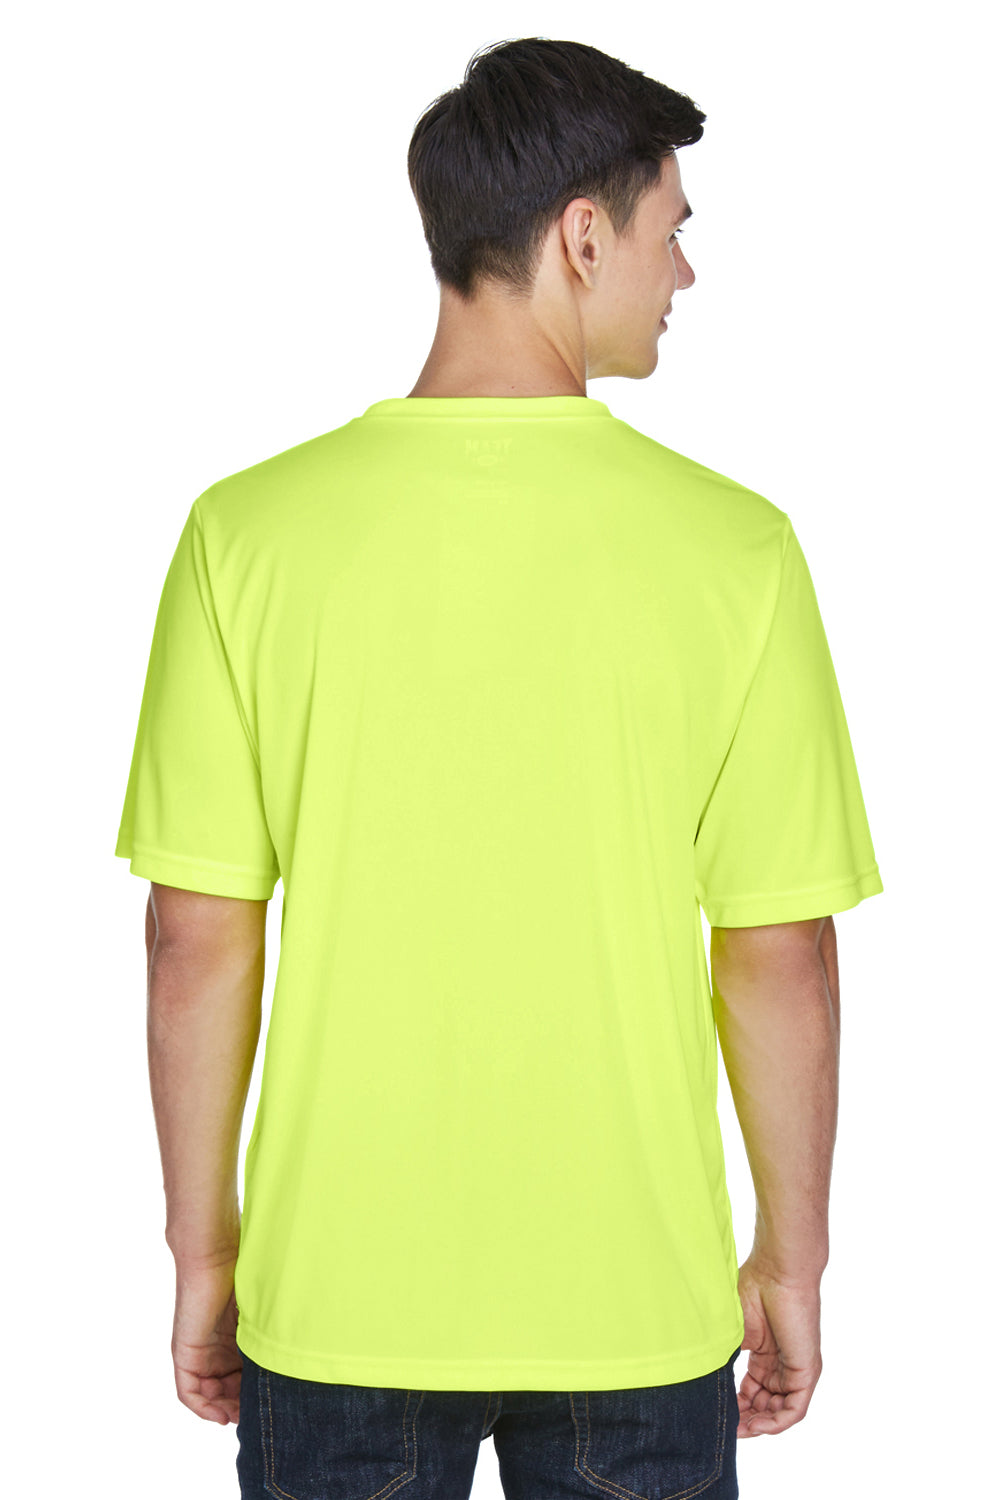 Team 365 TT11 Mens Zone Performance Moisture Wicking Short Sleeve Crewneck T-Shirt Safety Yellow Back